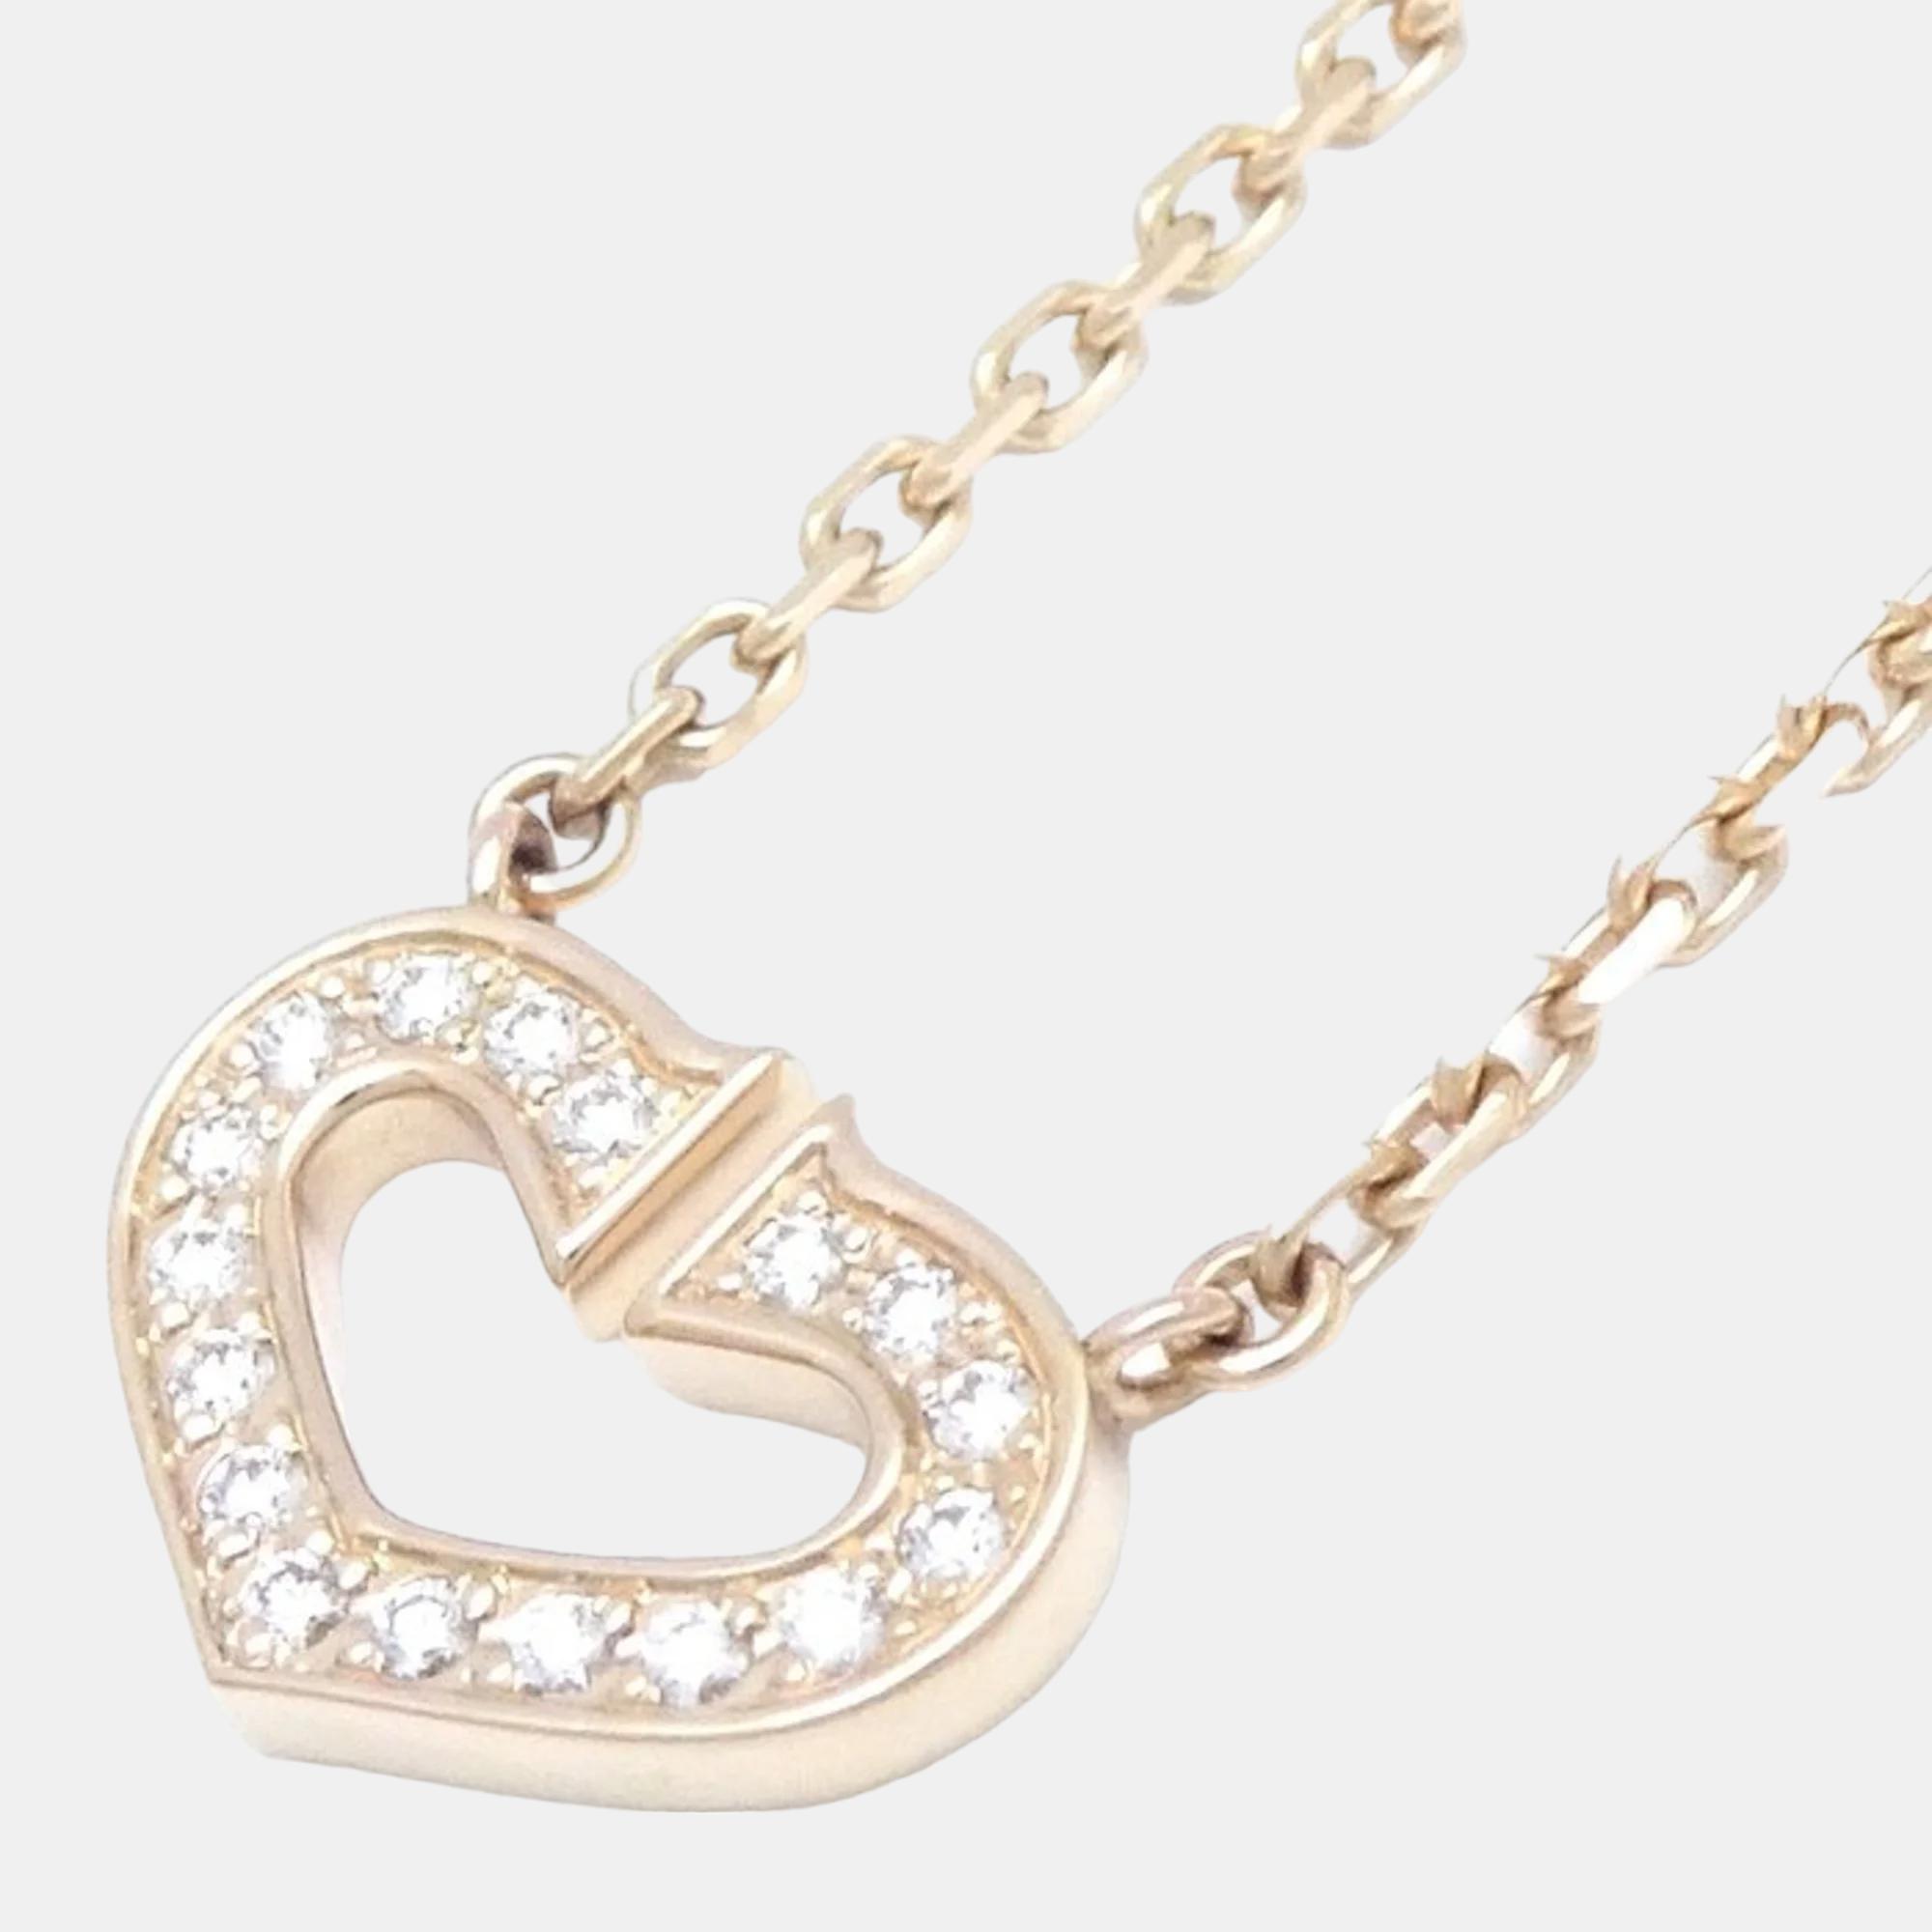 Cartier 18k rose gold and diamond heart c pendant necklace